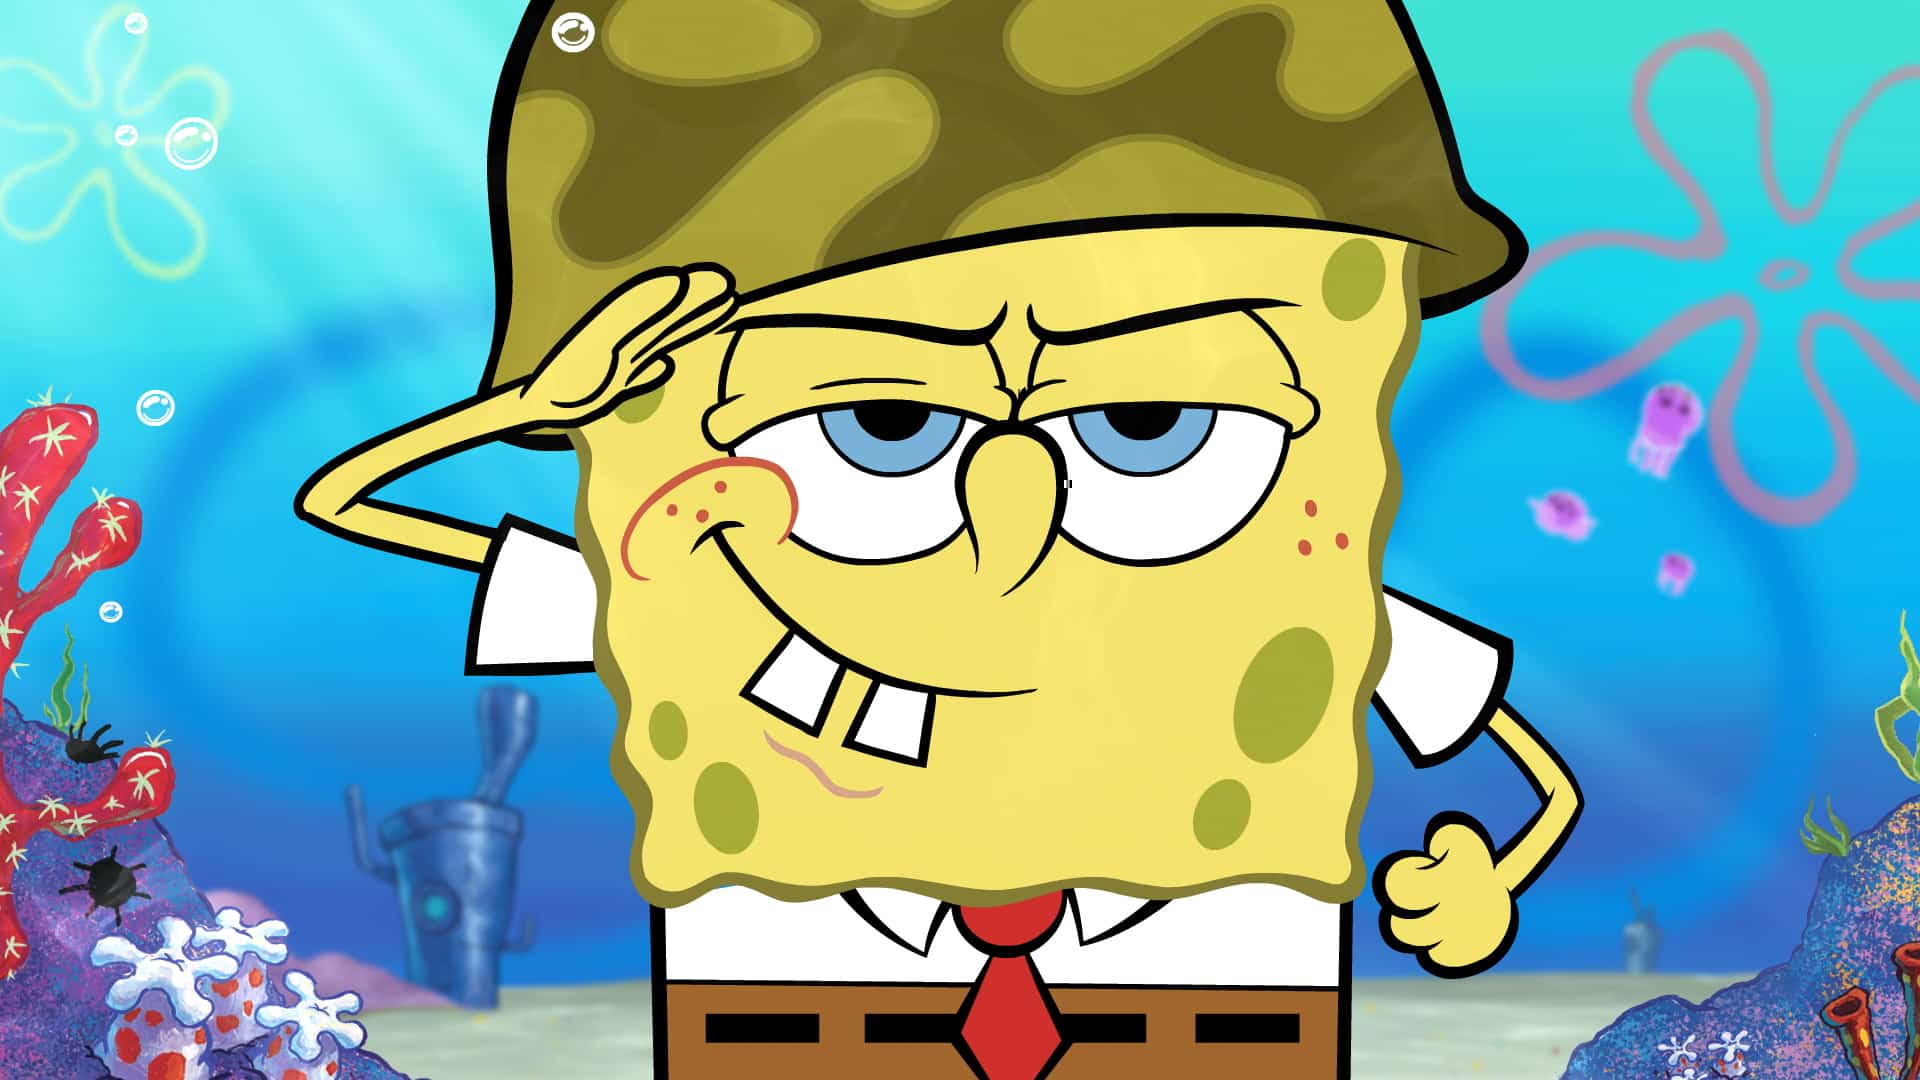 SpongeBob SquarePants 2